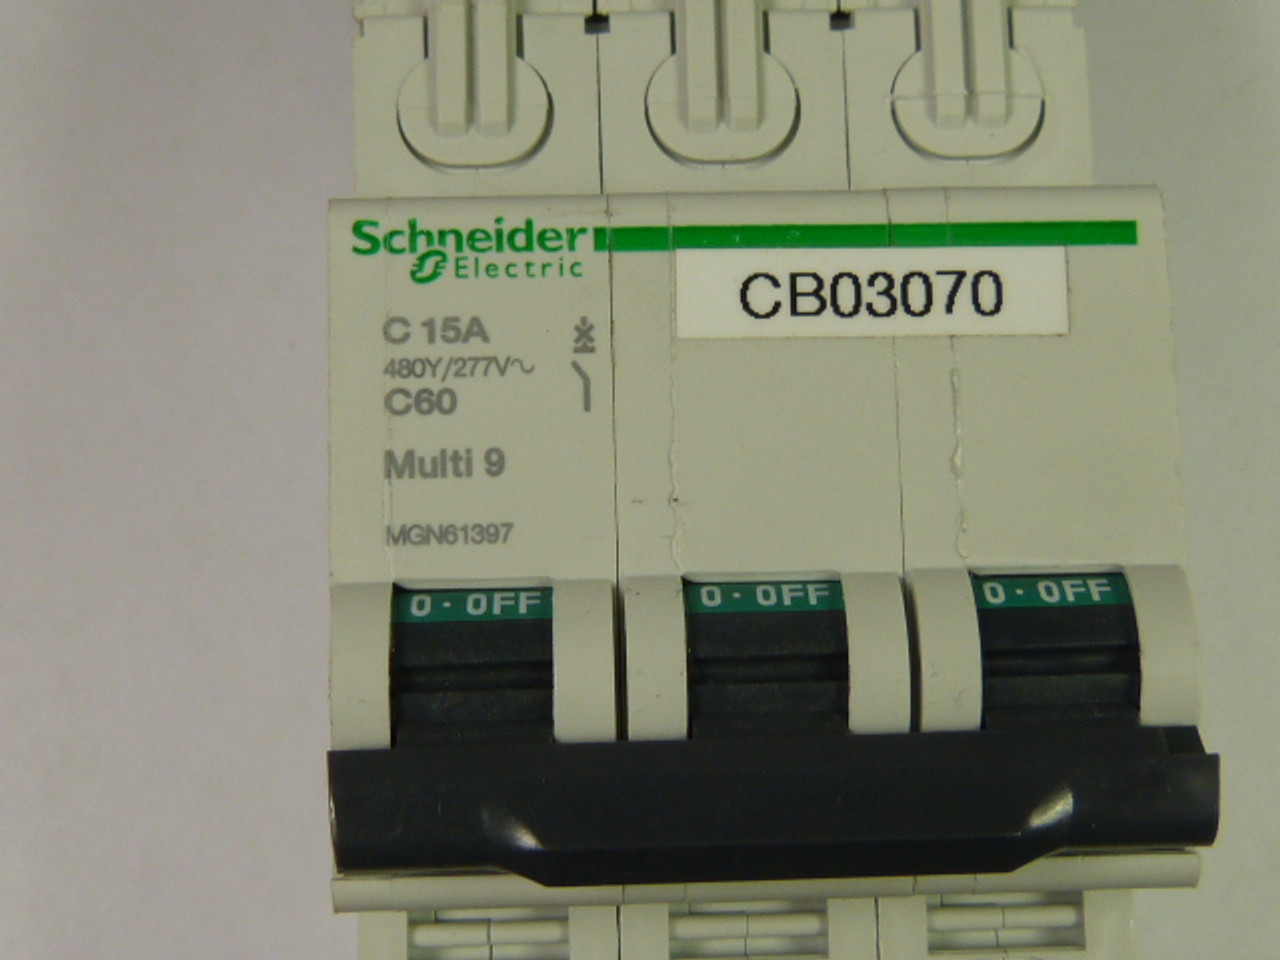 Siemens MGN61397 Circuit Breaker 480/277V 15A 3P MCB USED